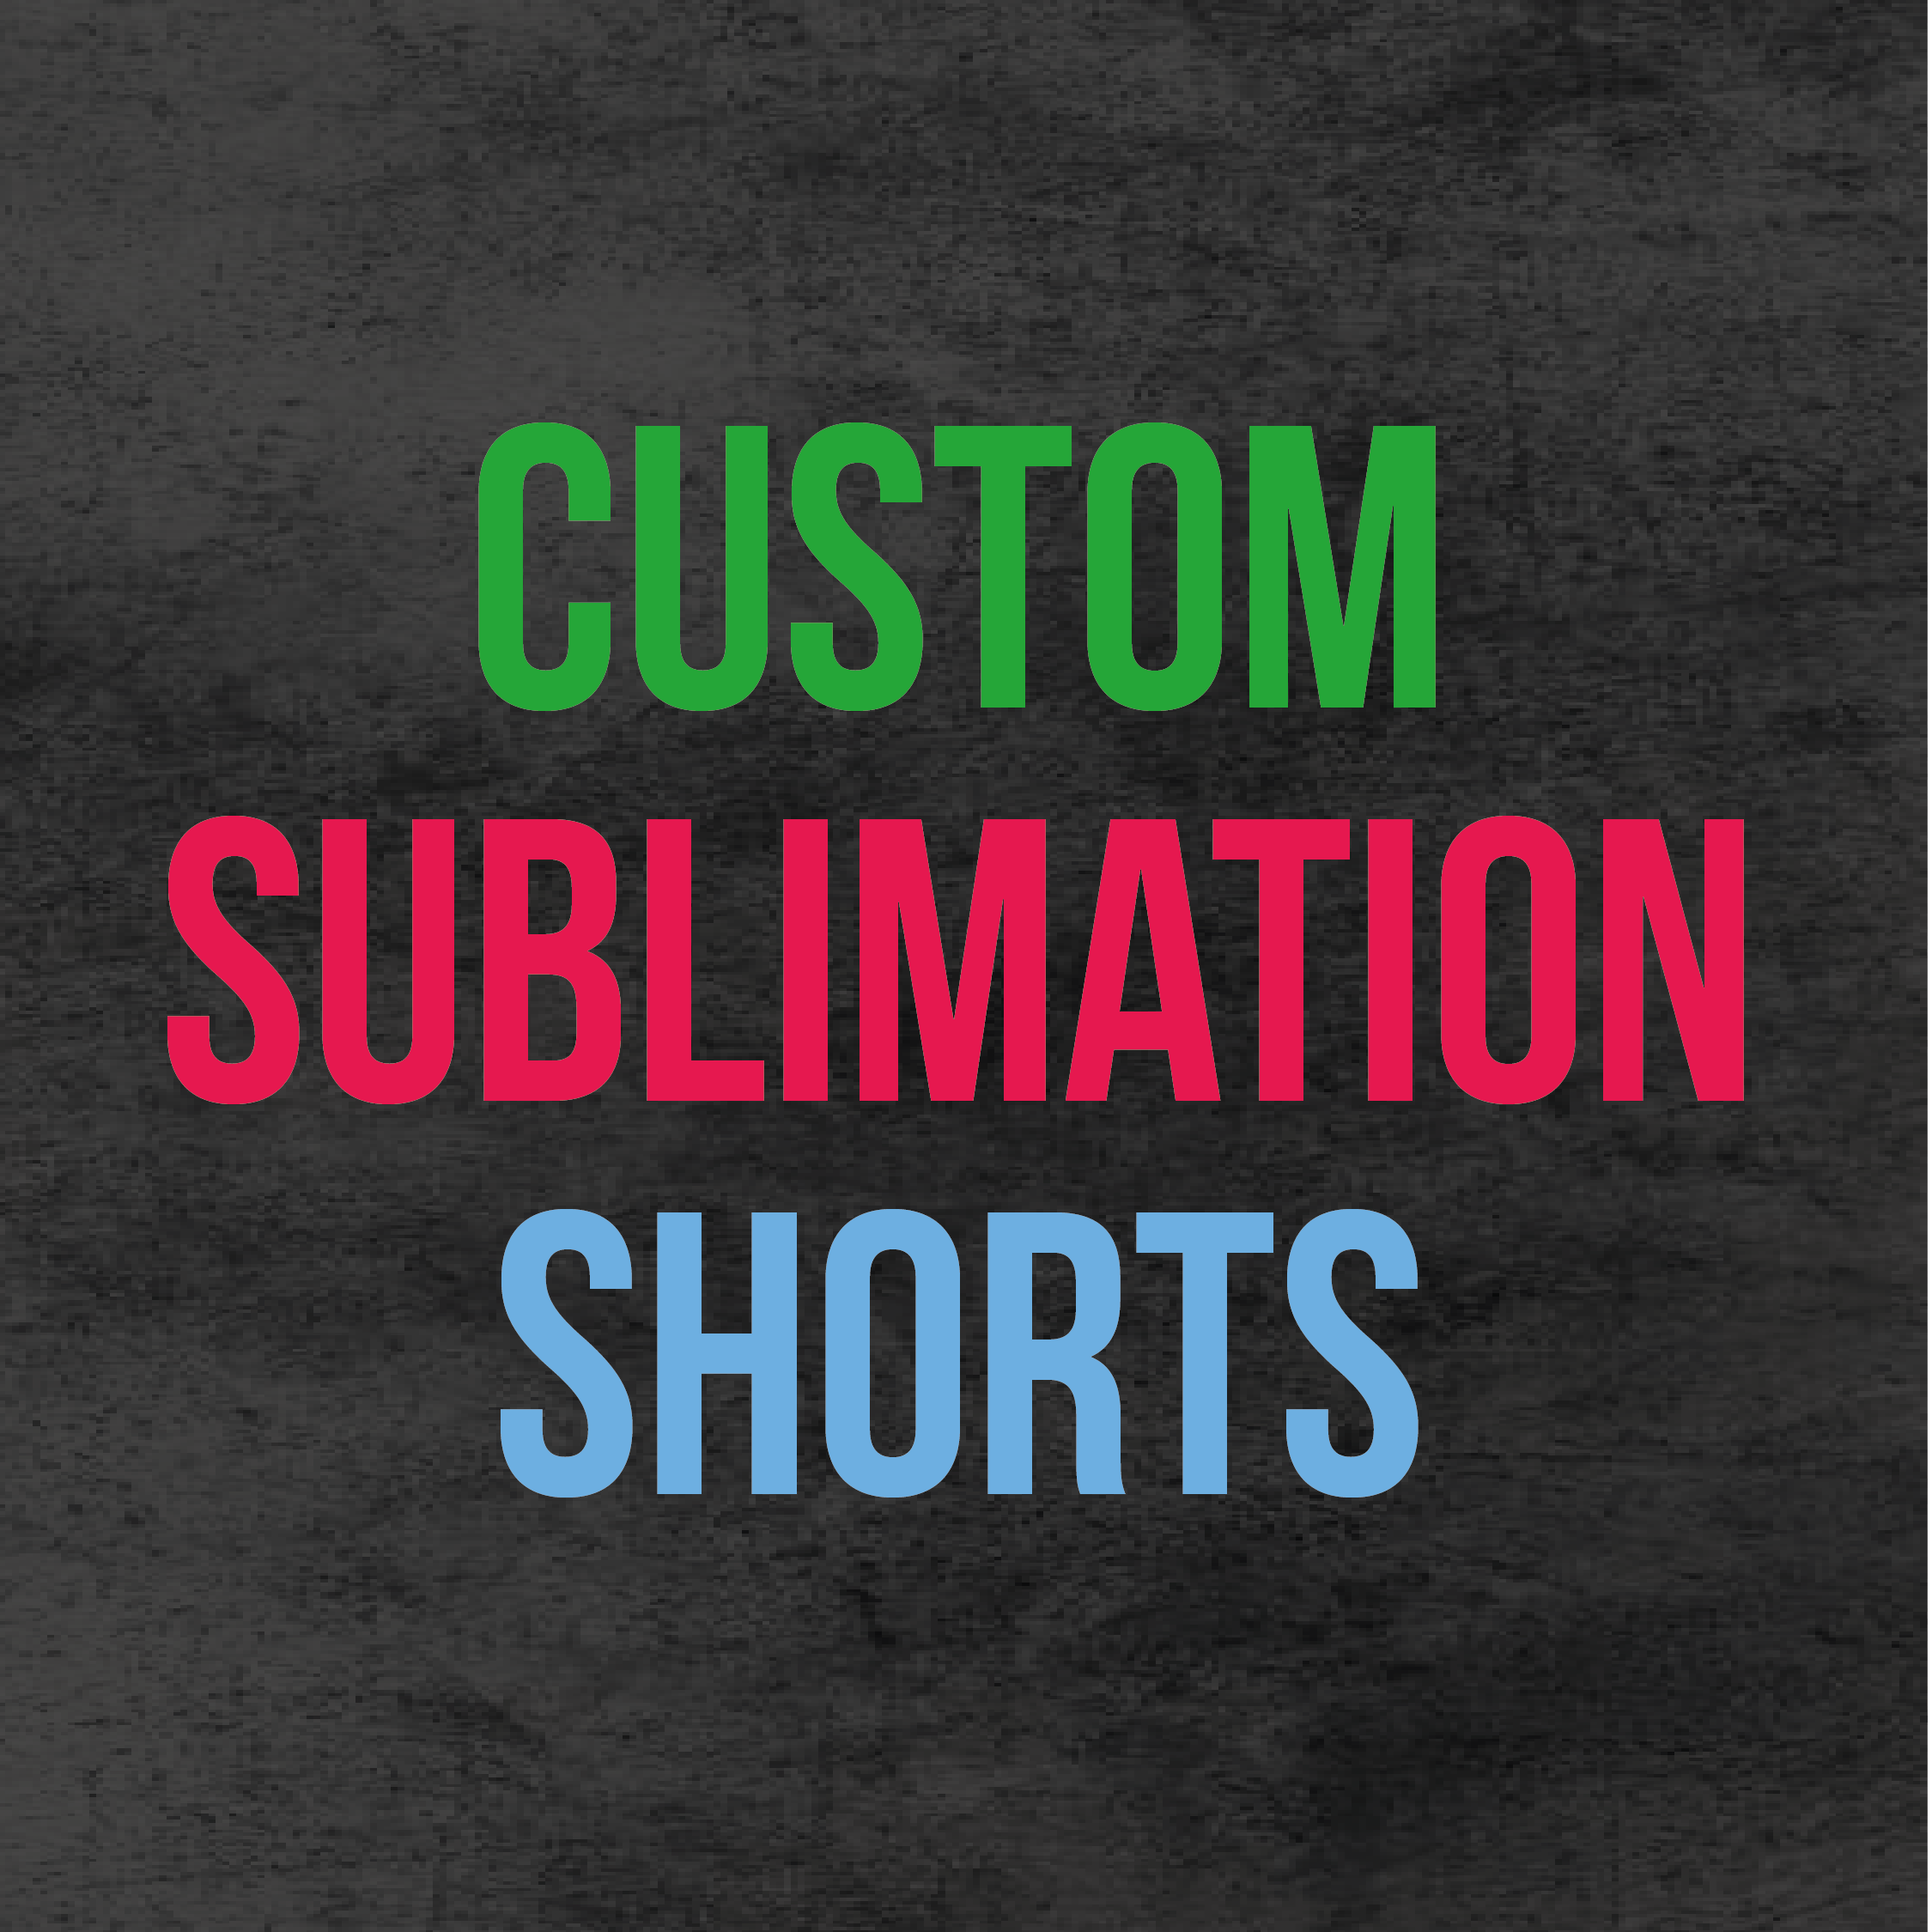 Fully Custom Team Shorts - Sample of 1